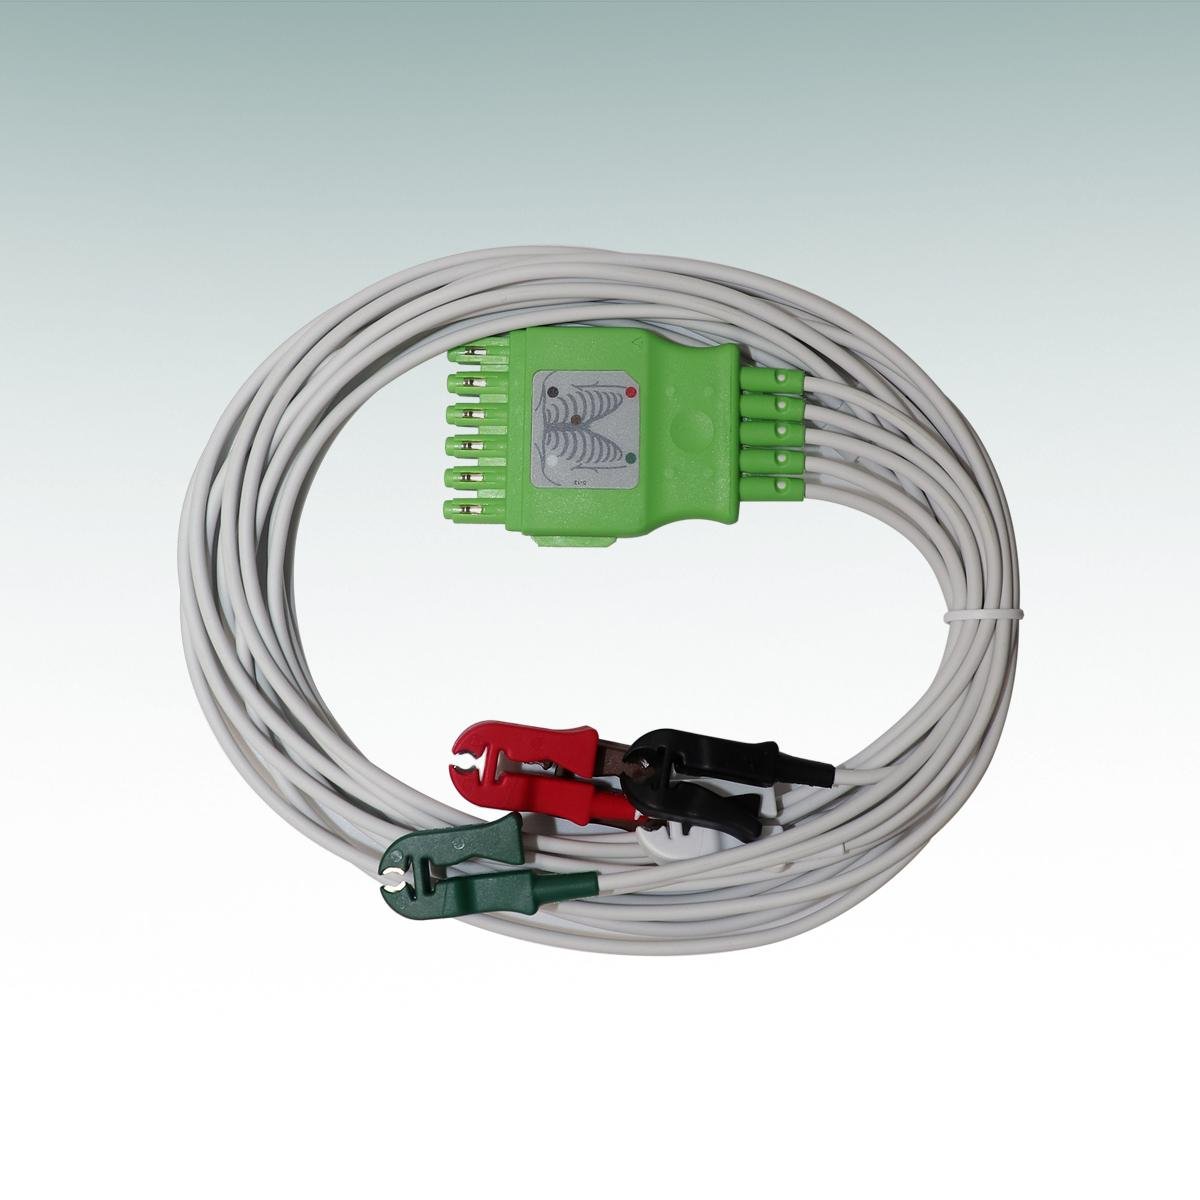 Original Drager Perseus A500 MP03404 ECG cables leadwires 6 holes ecg cable 2